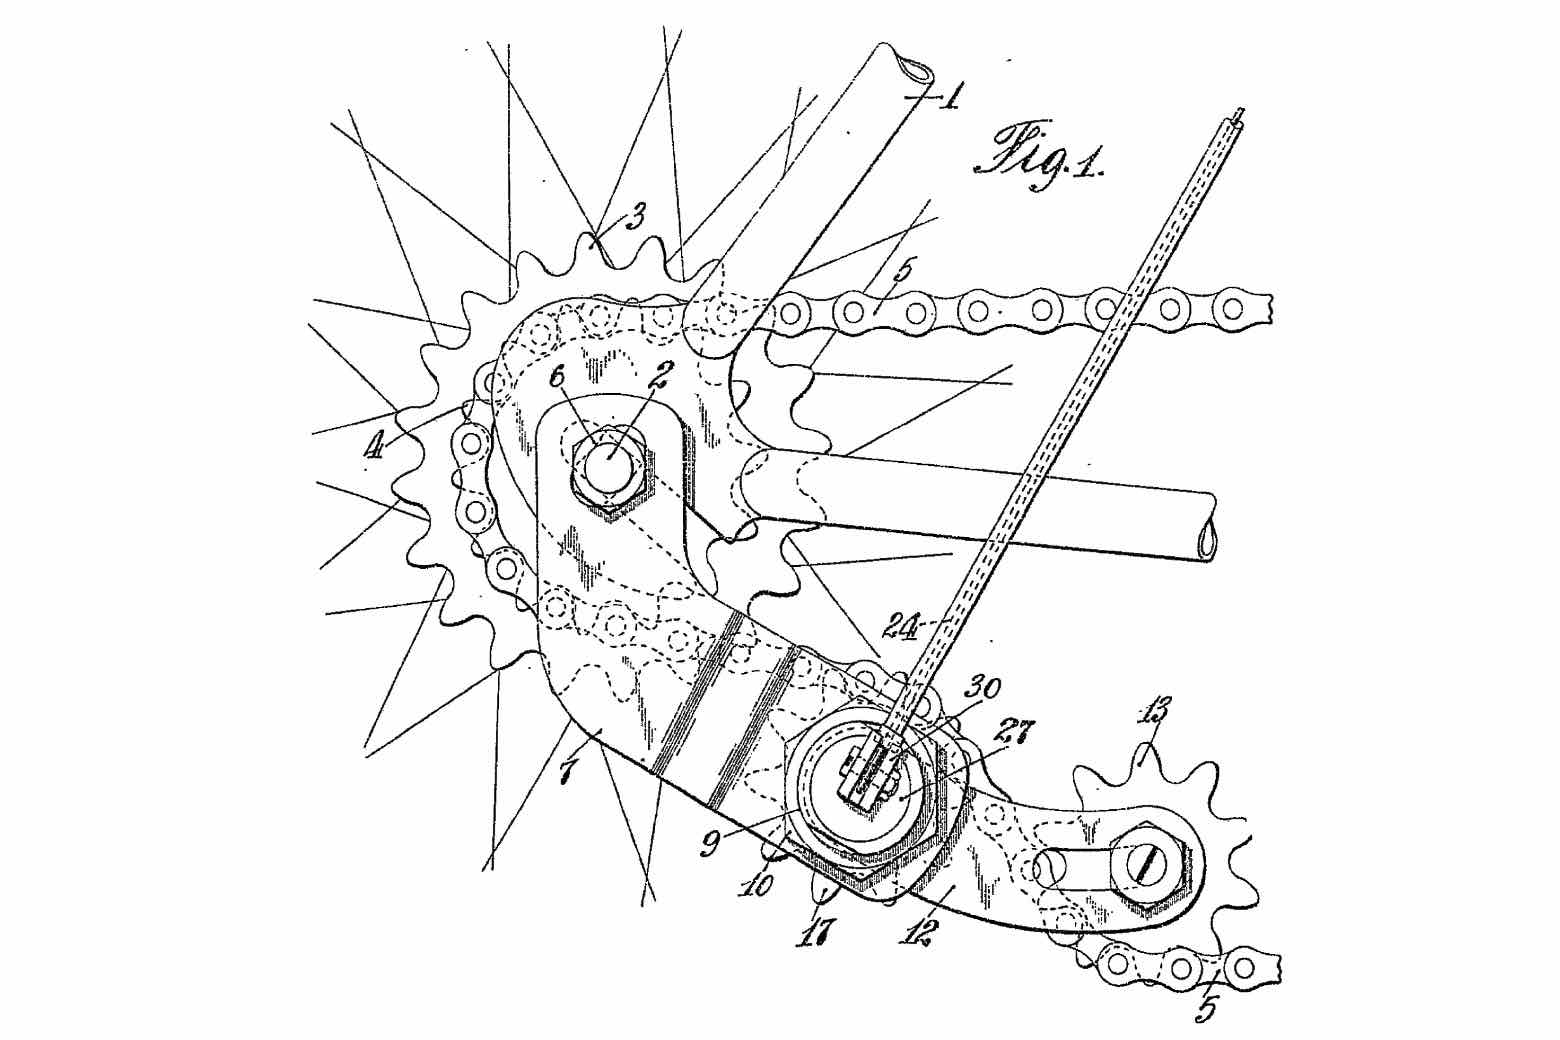 UK Patent 407,505 - Cyclo Witmy main image